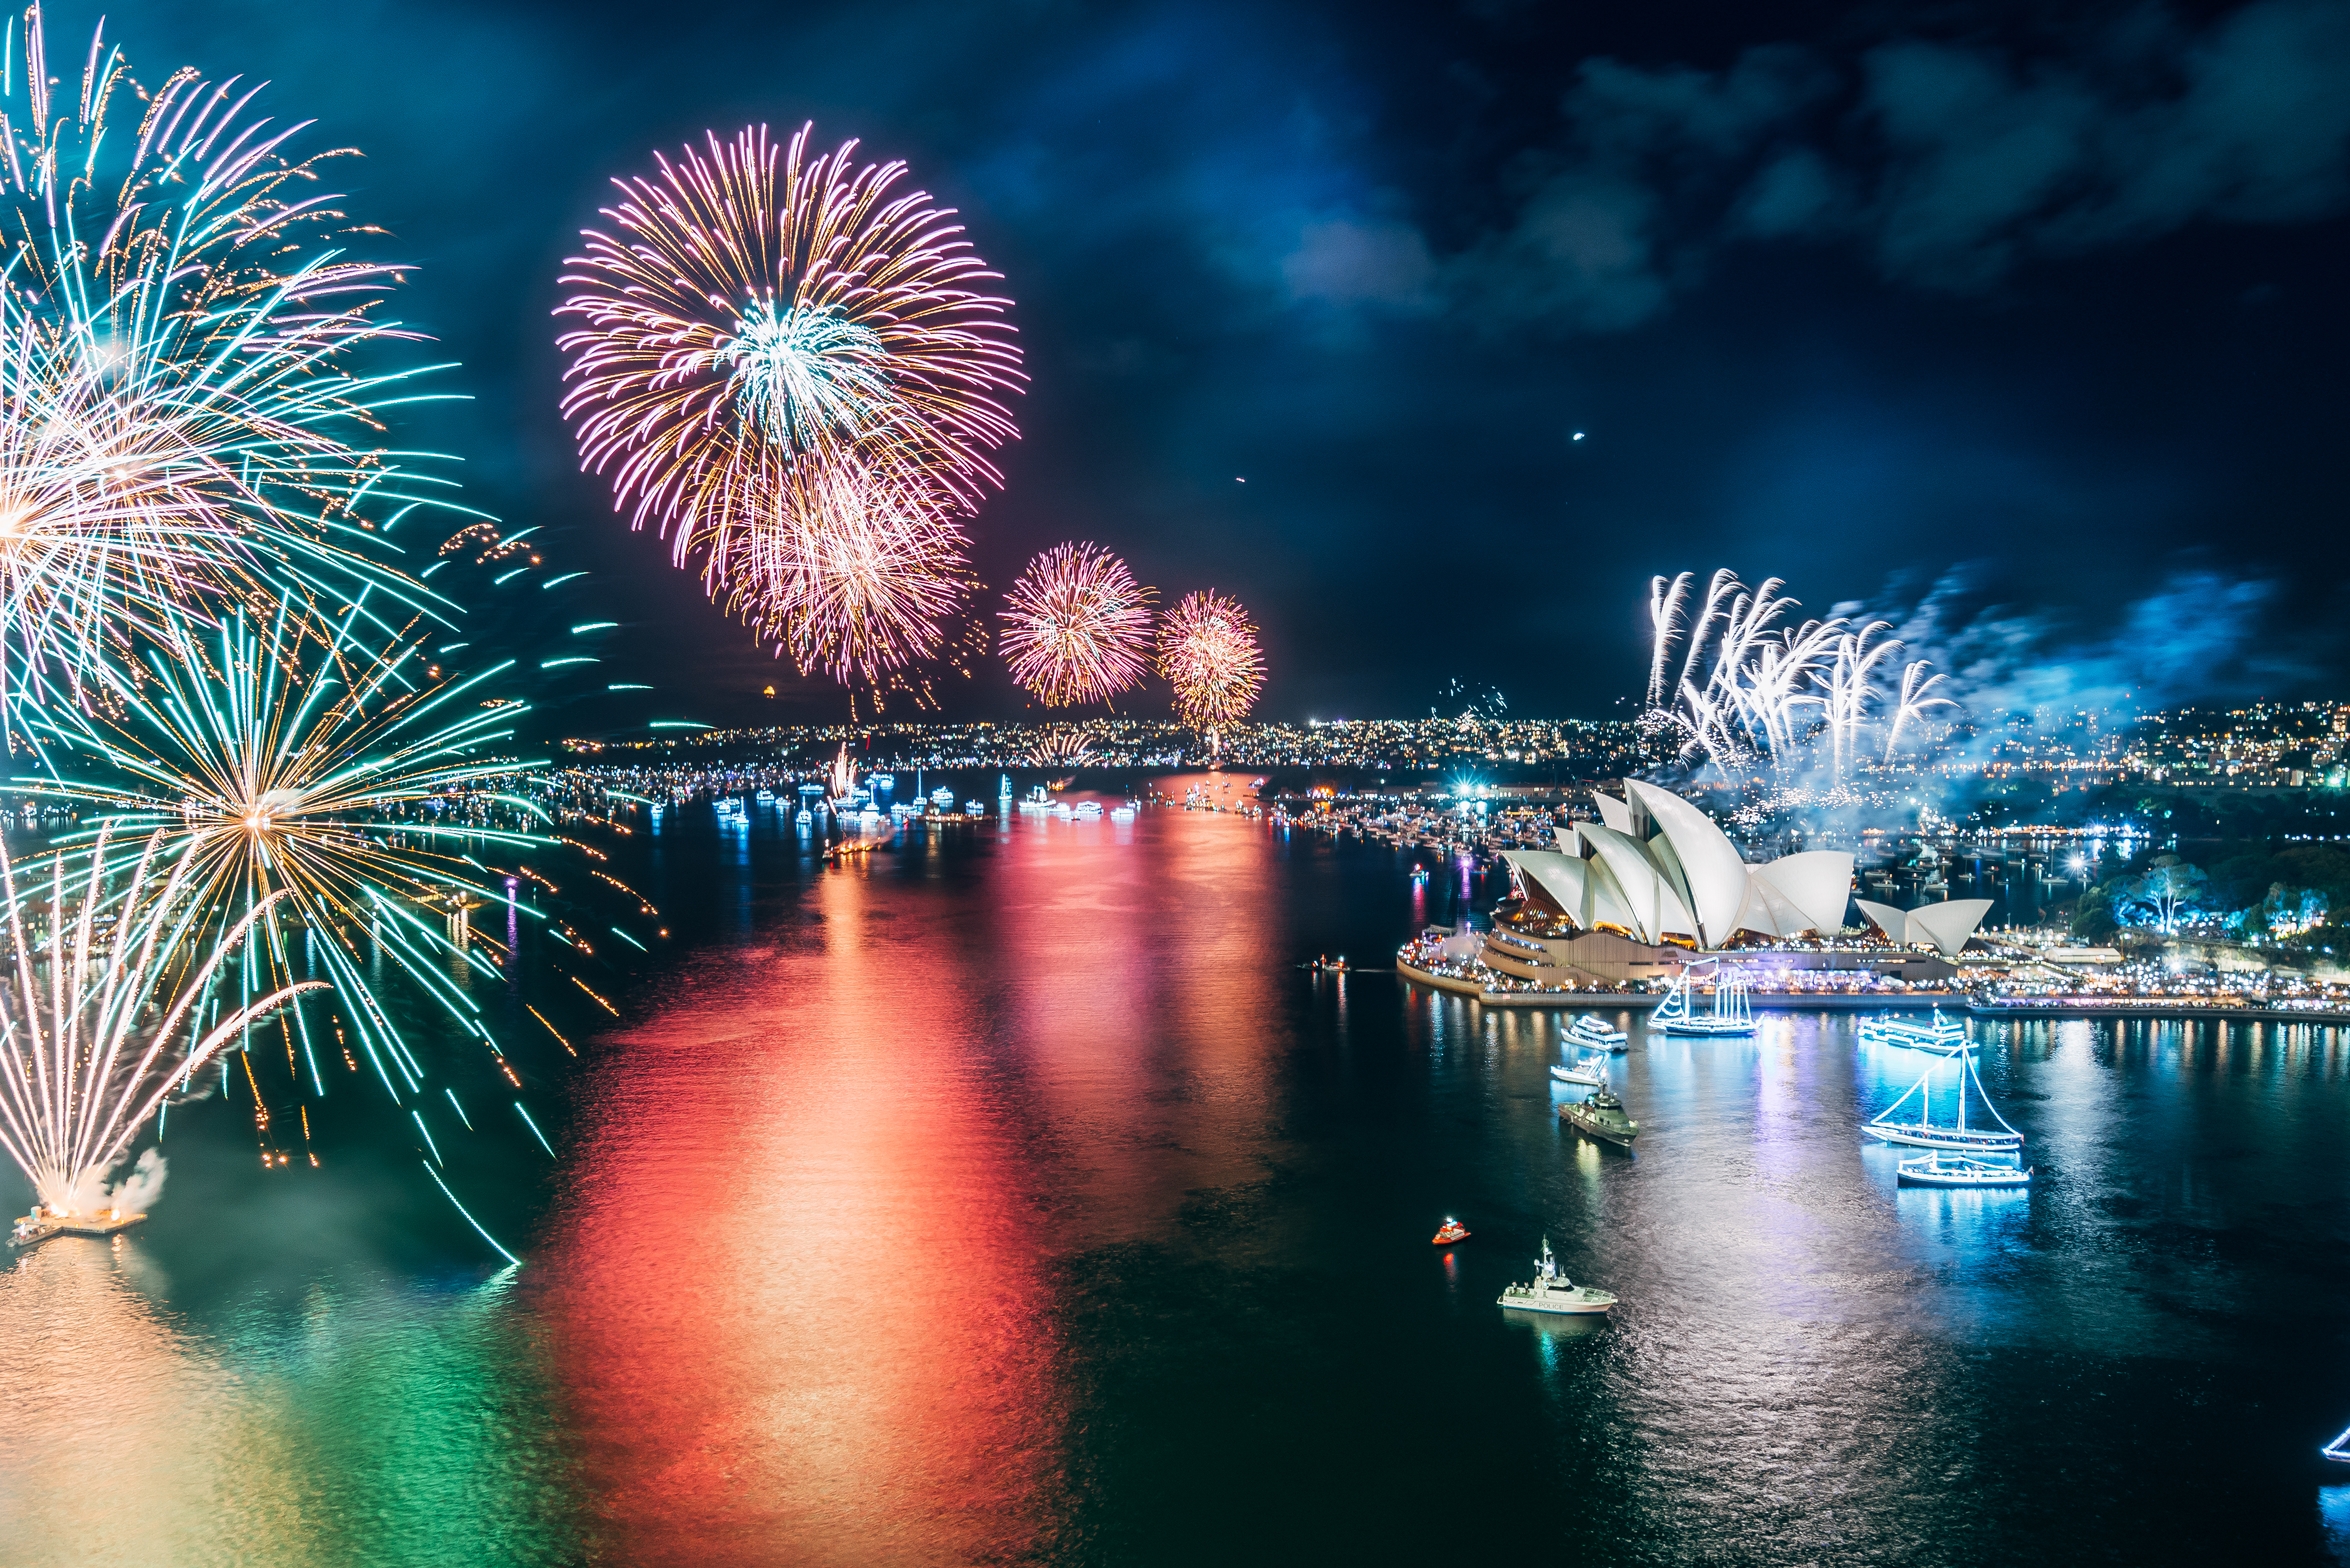 Sydney - New Year's Eve Fireworks 2015/16